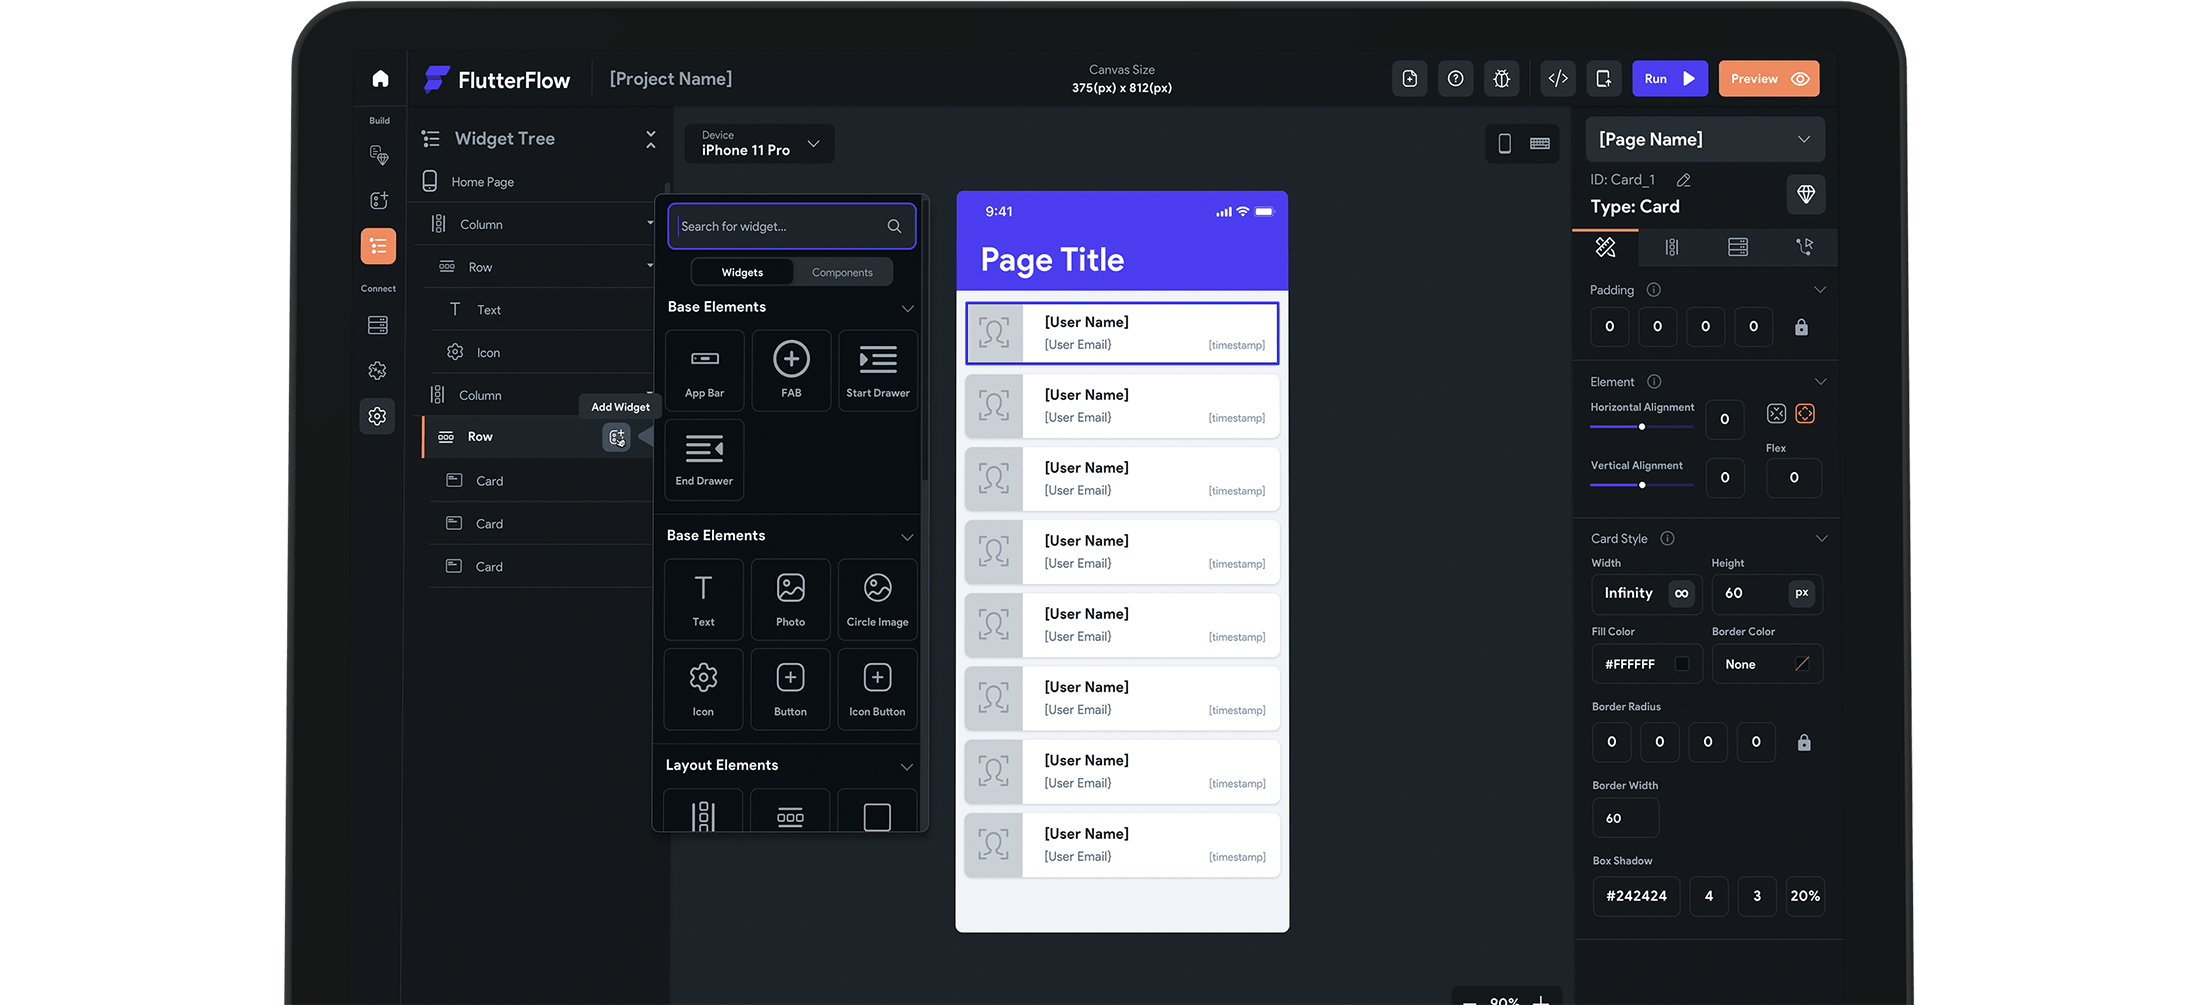 flutter desktop app tutorial